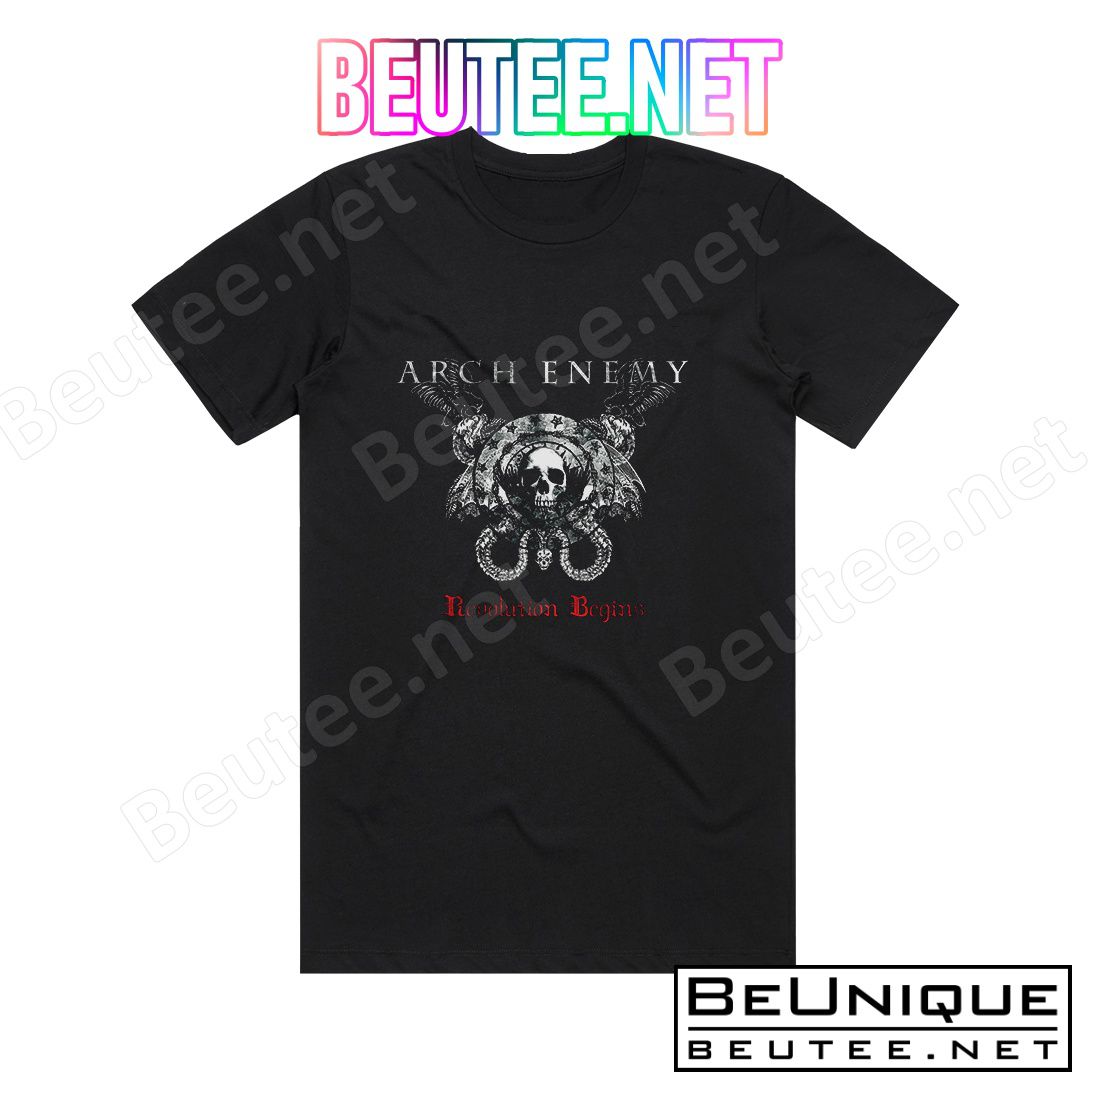 Arch Enemy Revolution Begins Album Cover T-Shirt